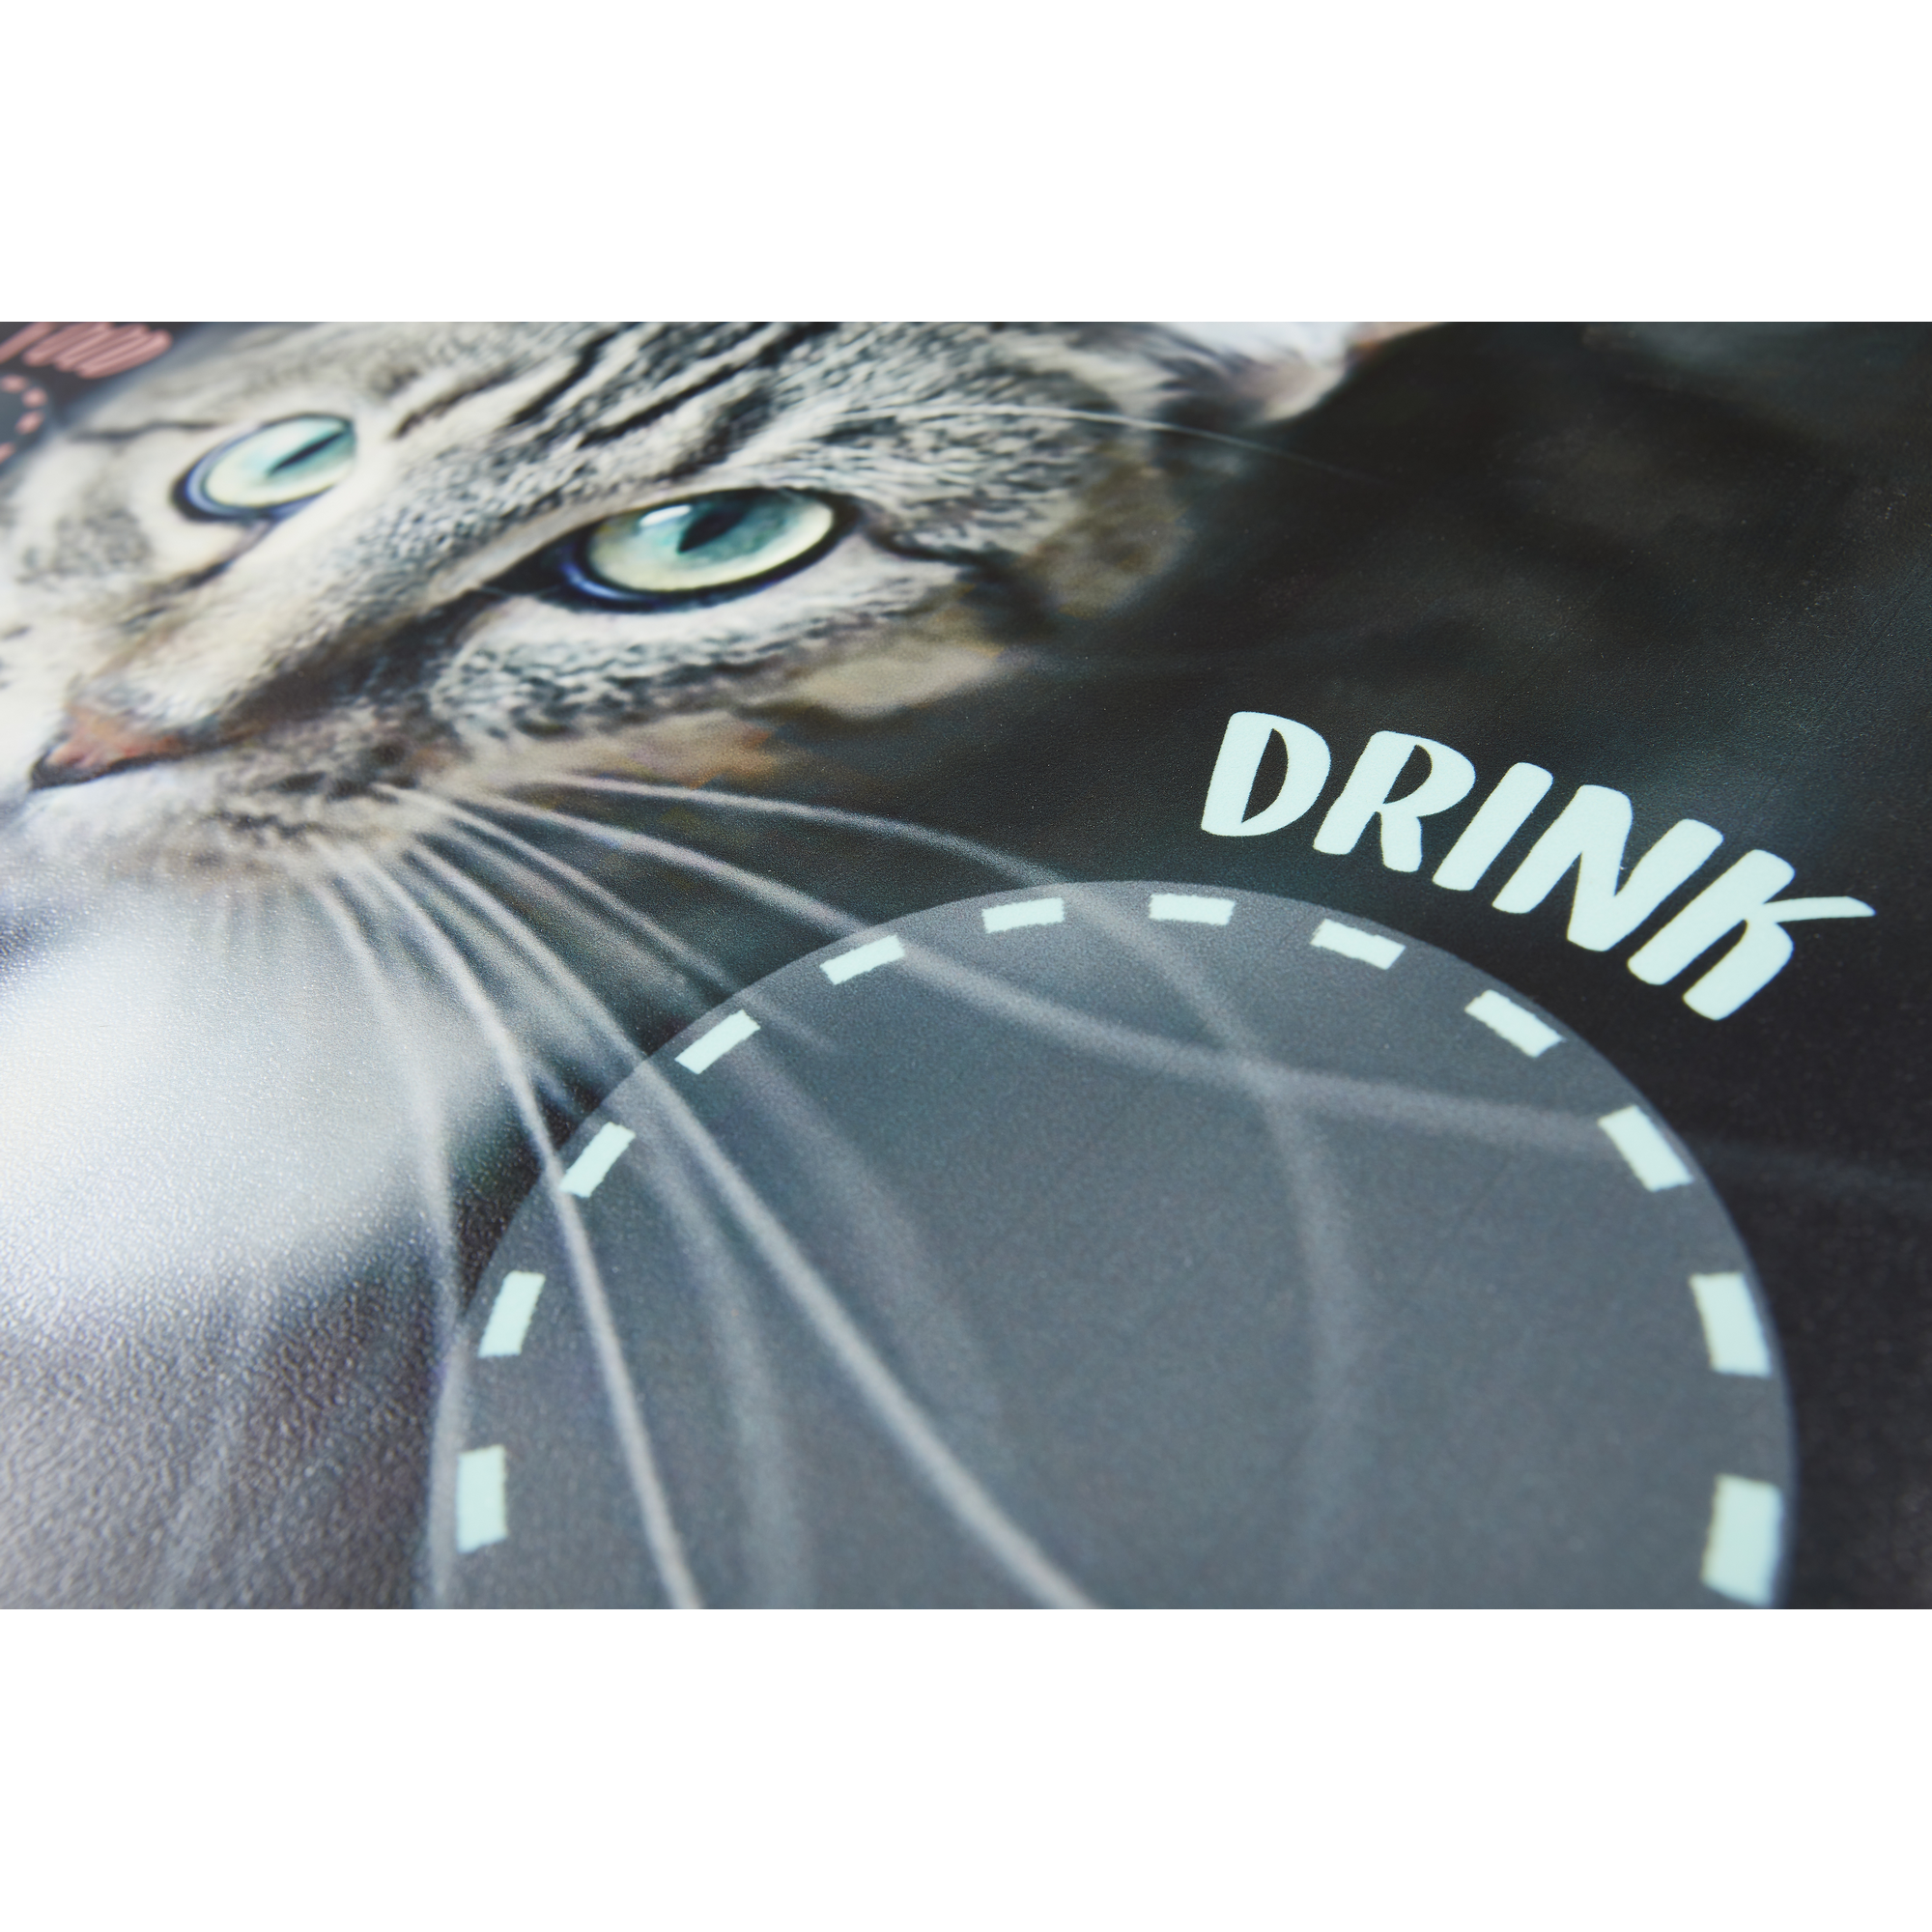 Napfunterlage 'Proper Food + Drink Cat' mehrfarbig 49 x 79 cm + product picture